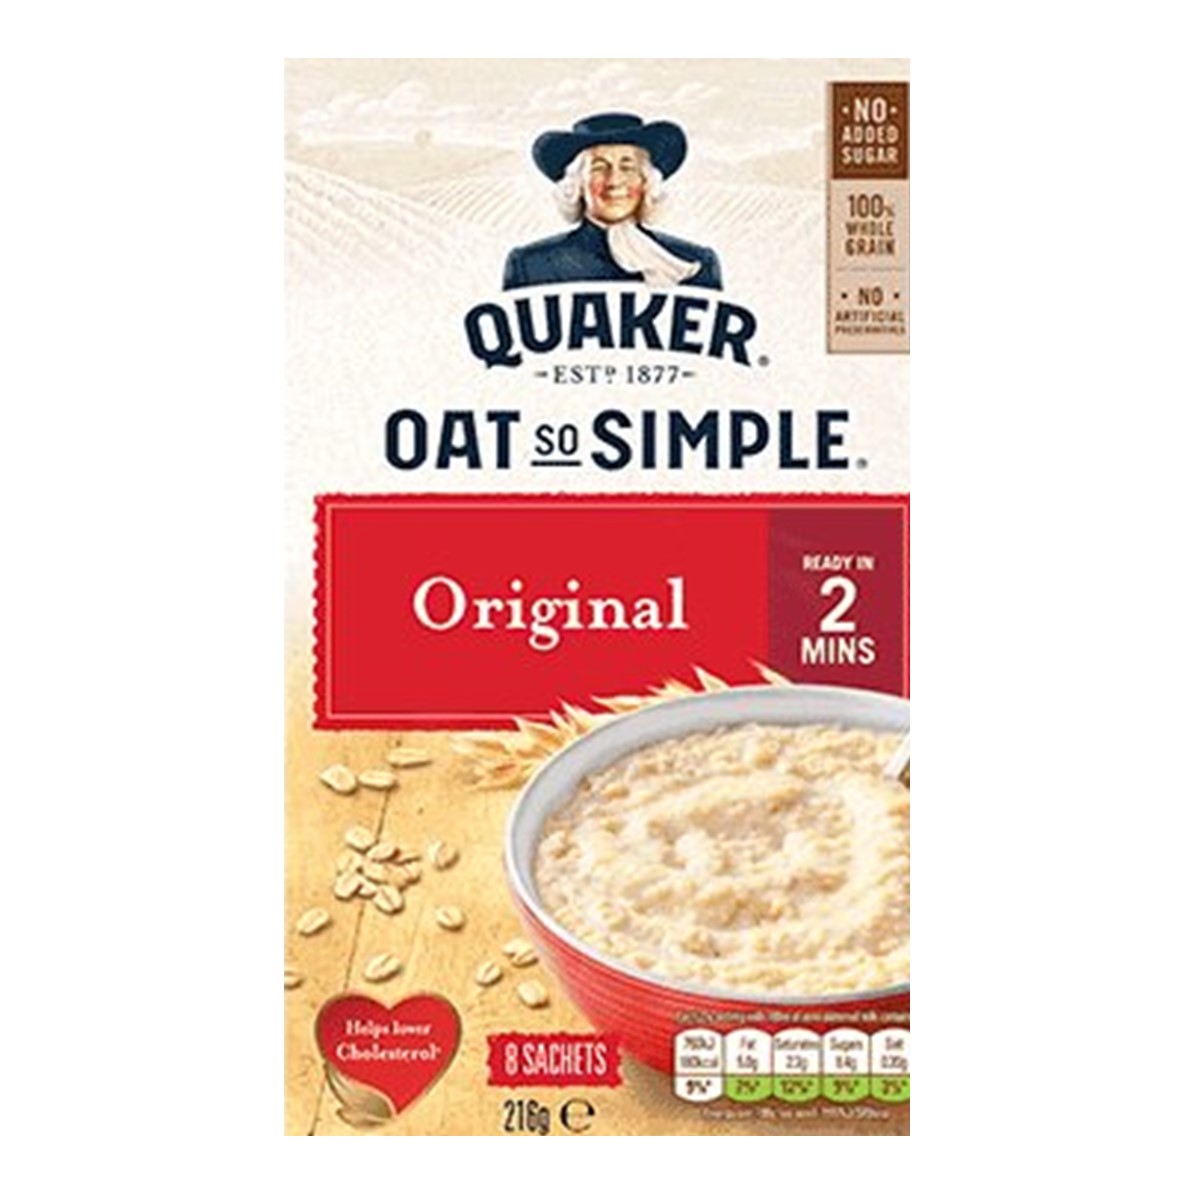 Quaker Oat So Simple Original - box 60 sachets